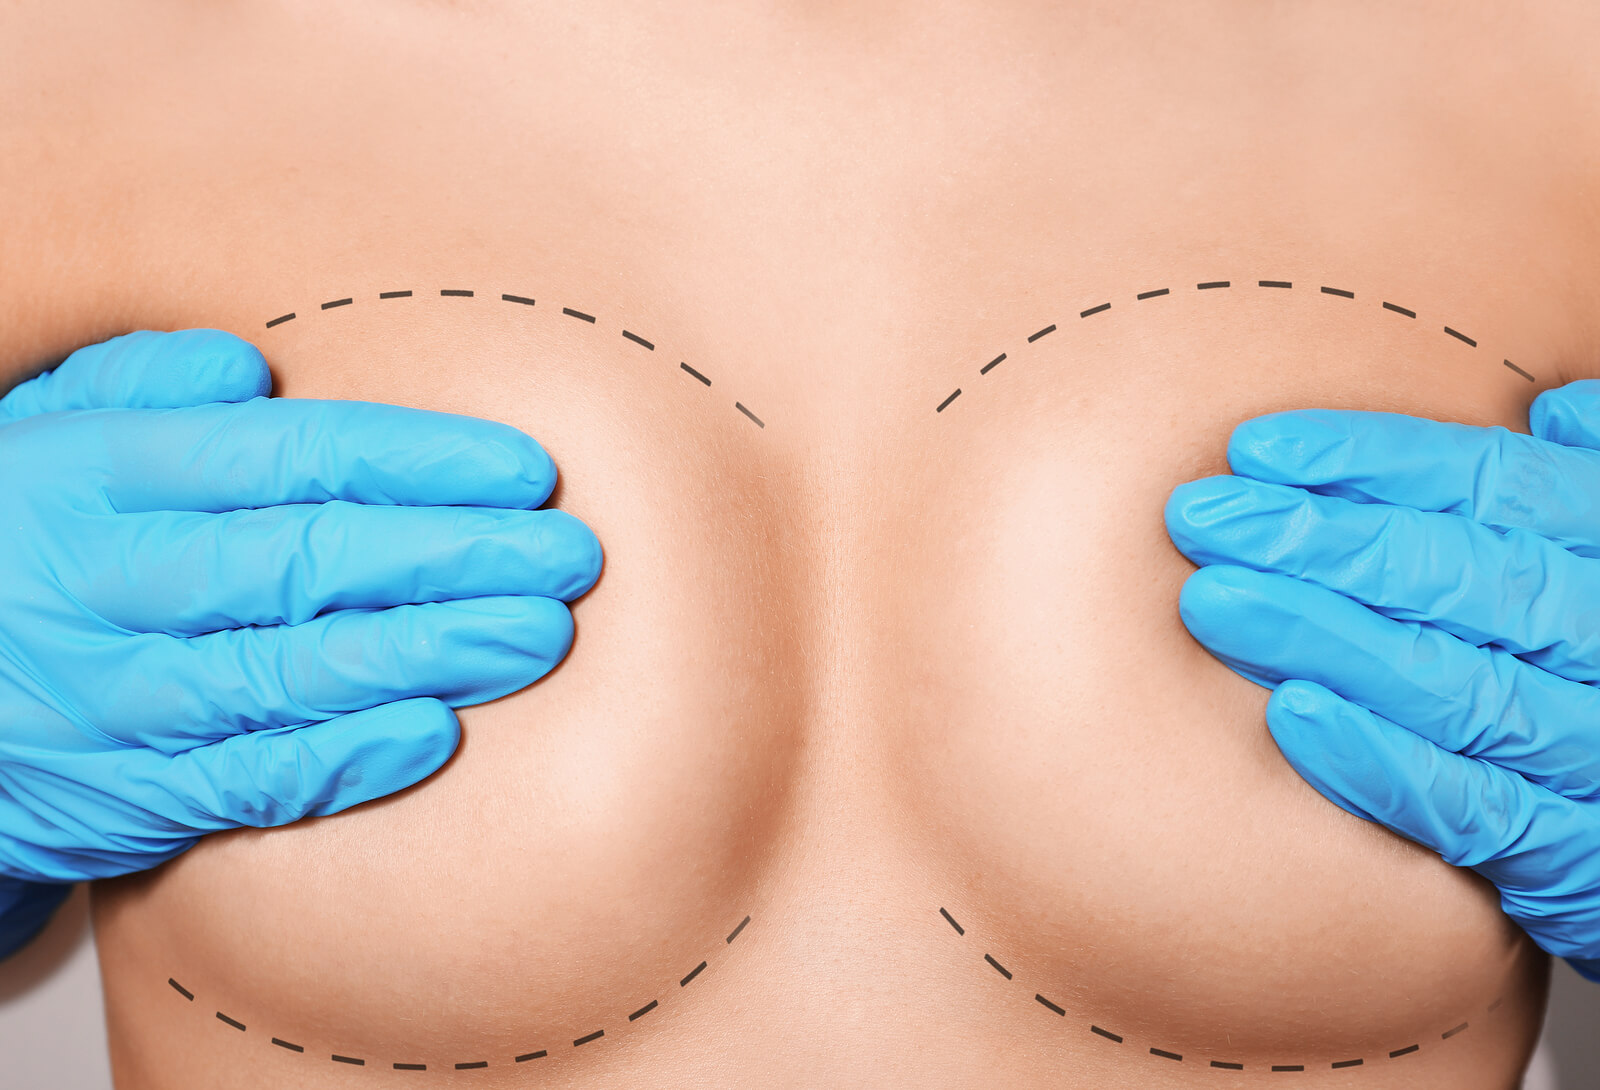 Breast fat transfer lift asymmetrical nipple sag rejuvenate